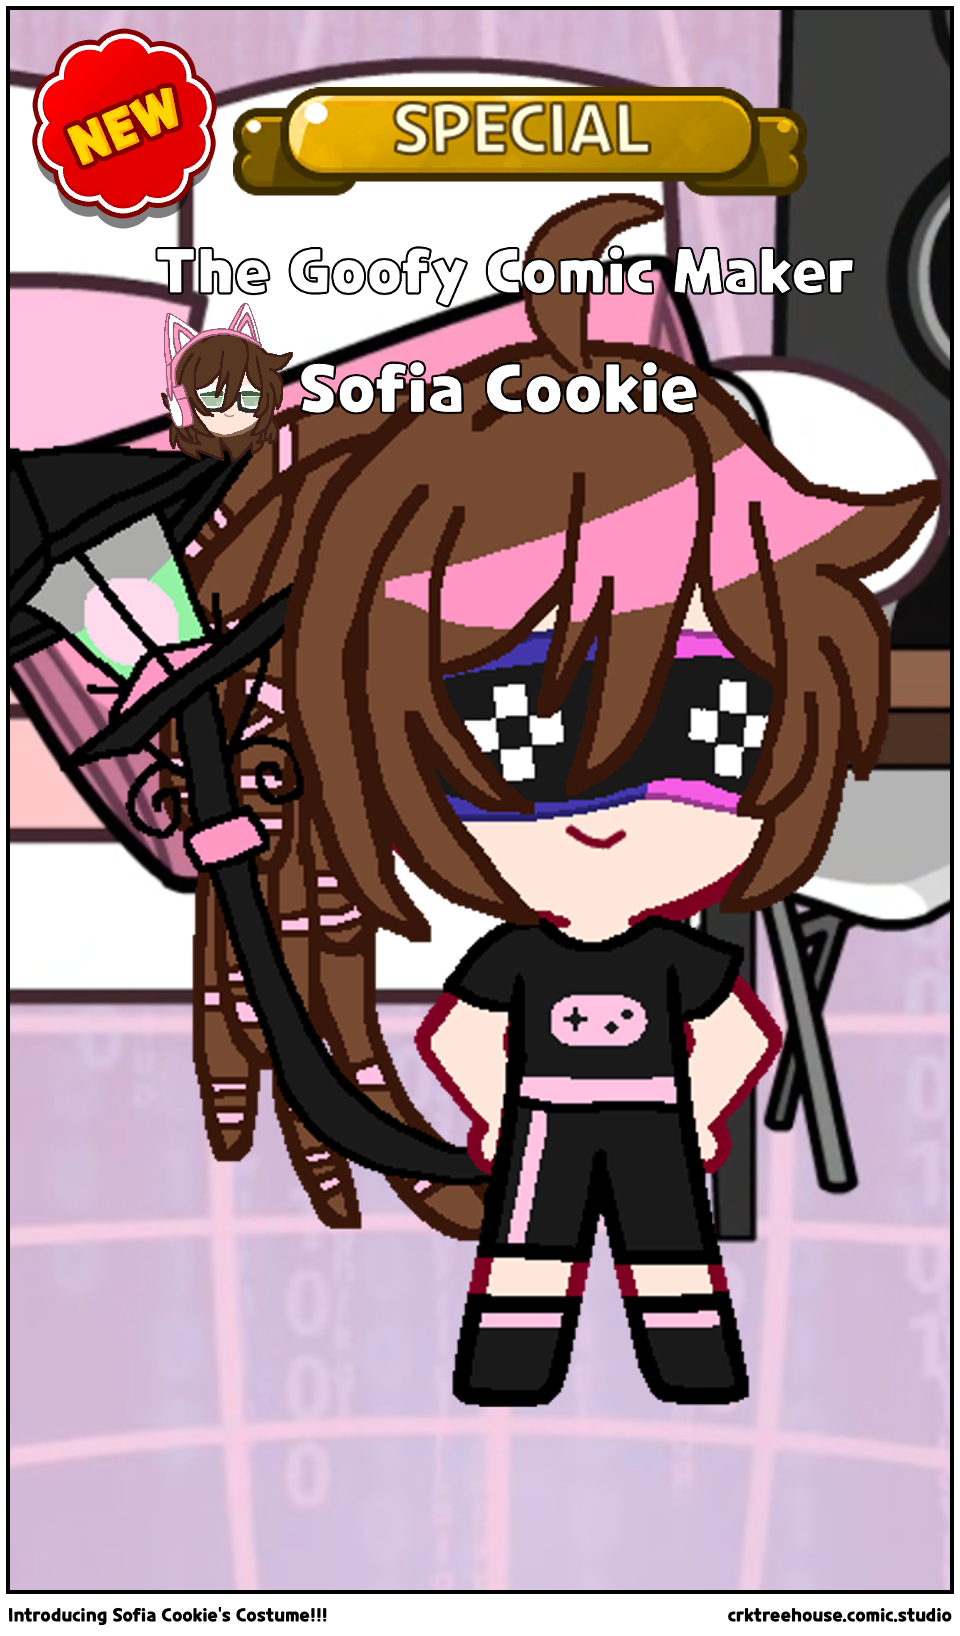 Introducing Sofia Cookie's Costume!!!